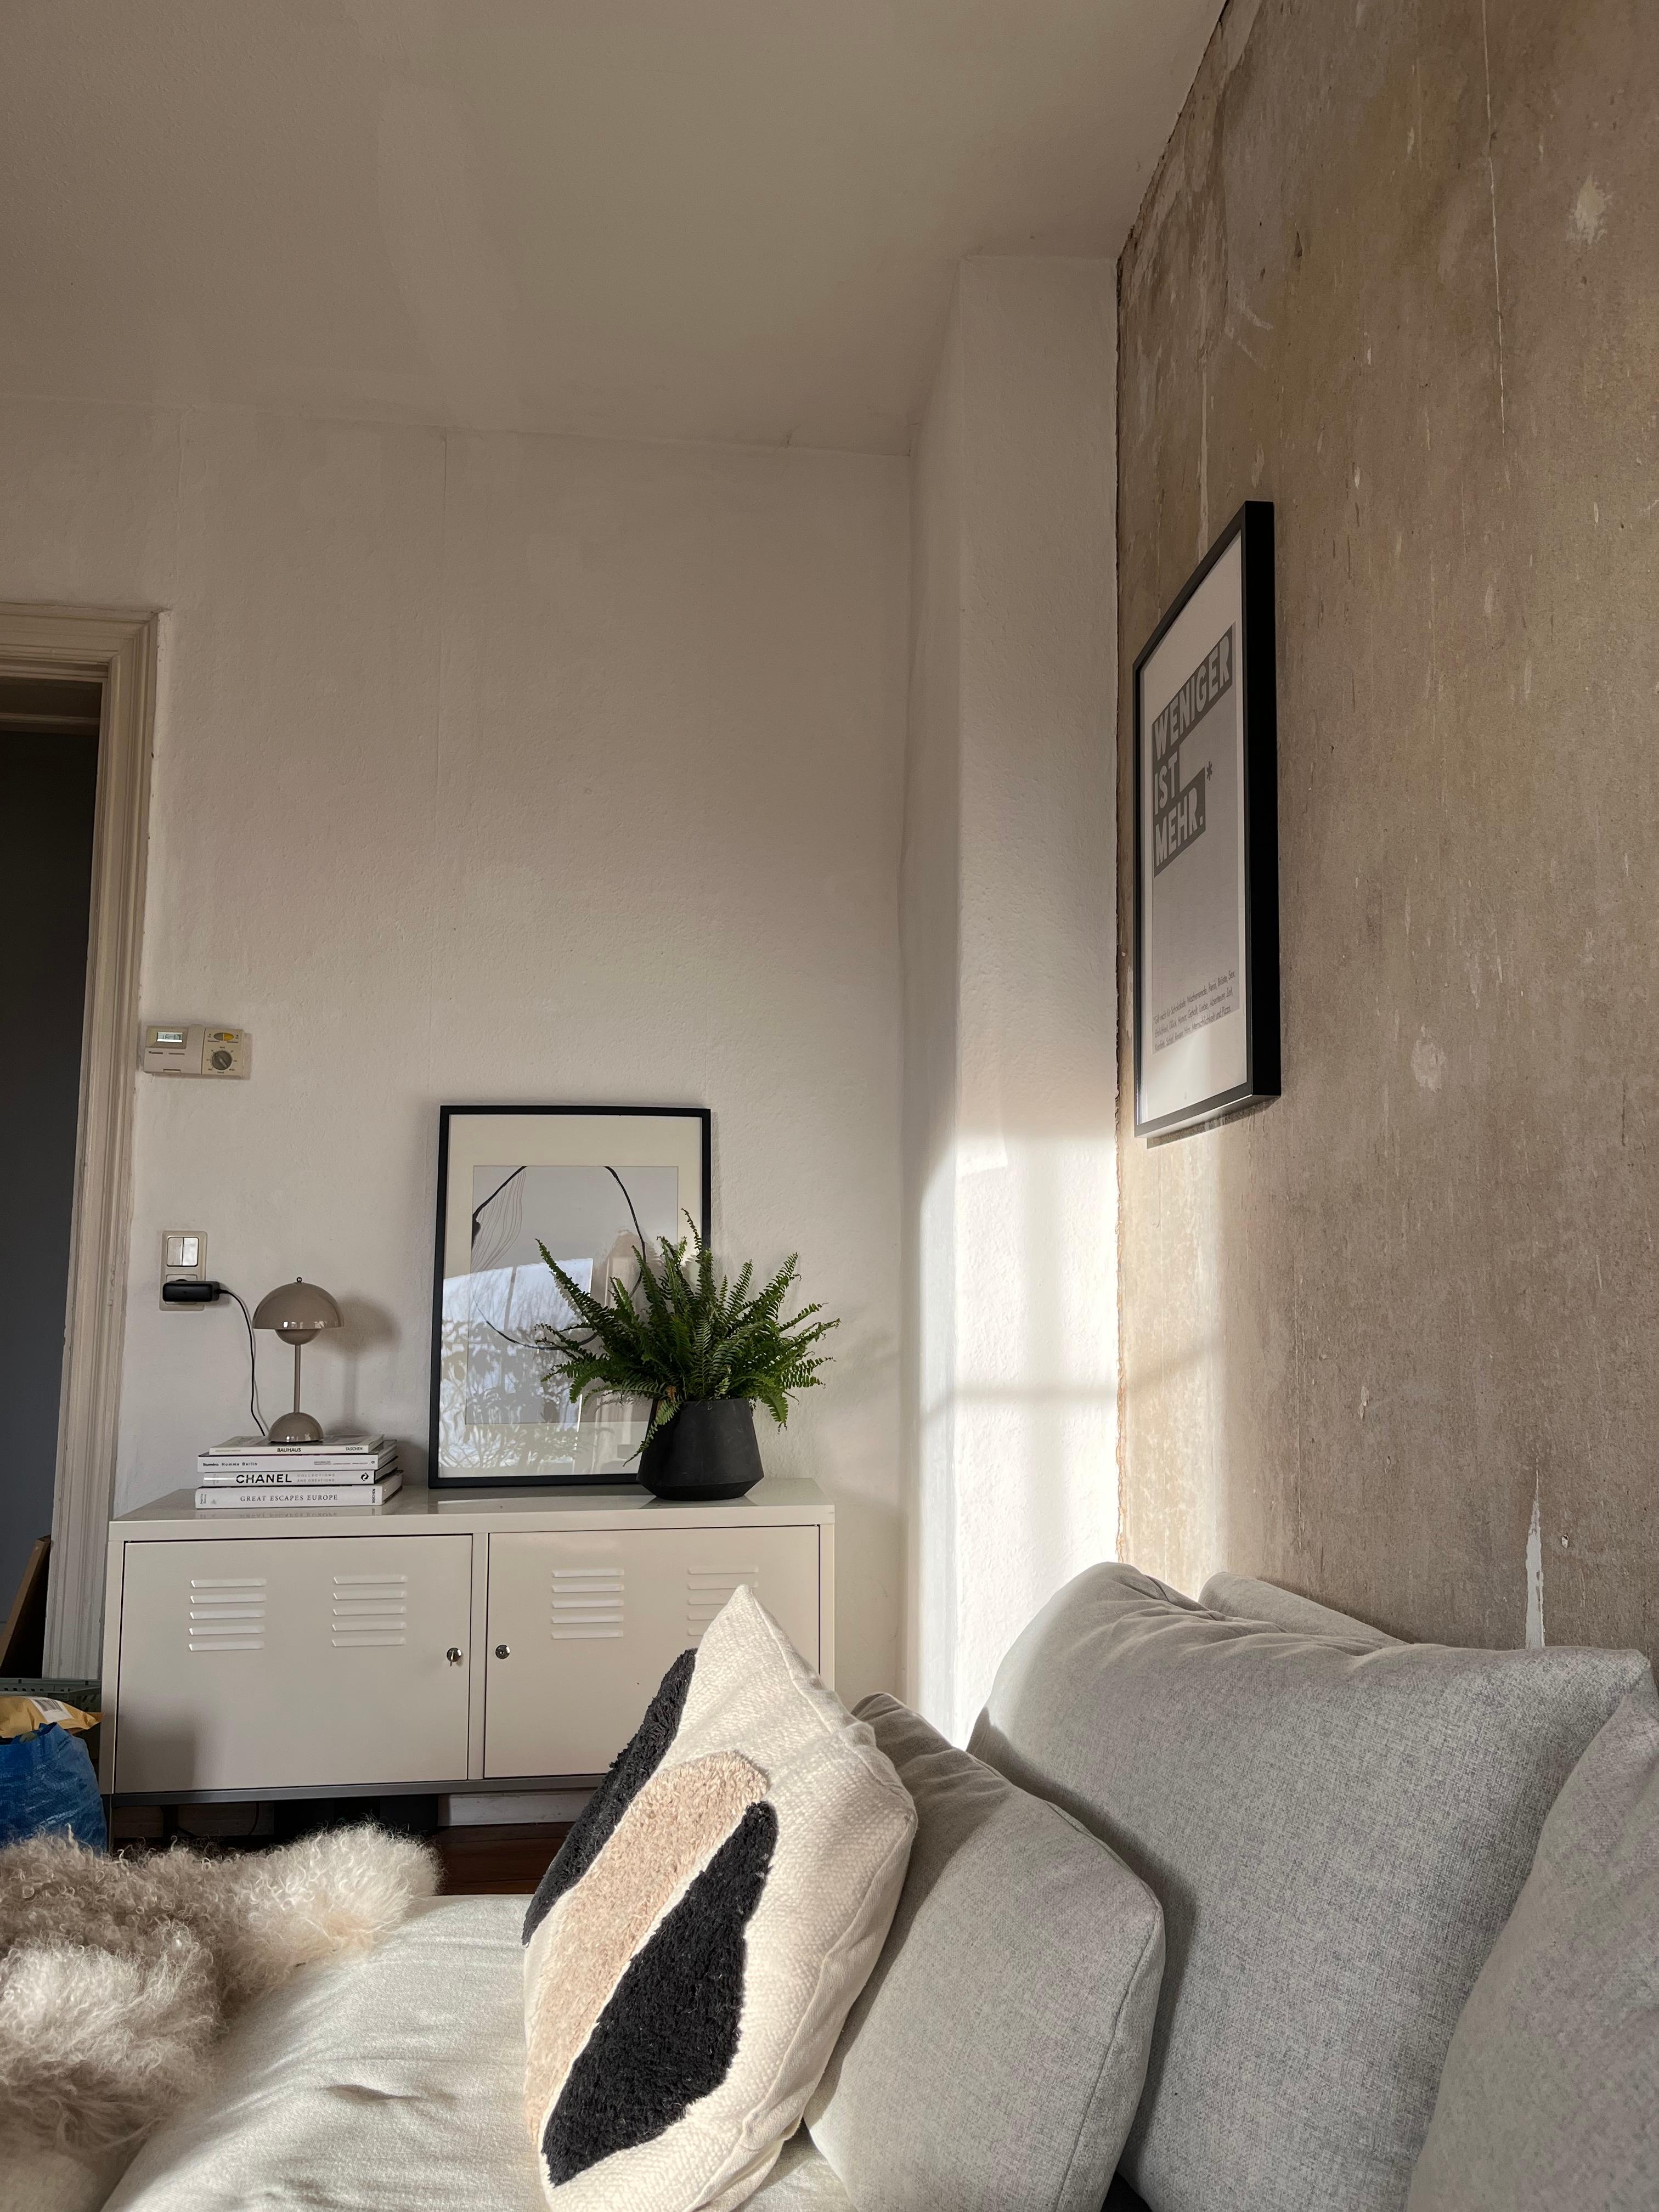 #livingroom #berlin #interior #cozyhome #couchstyle